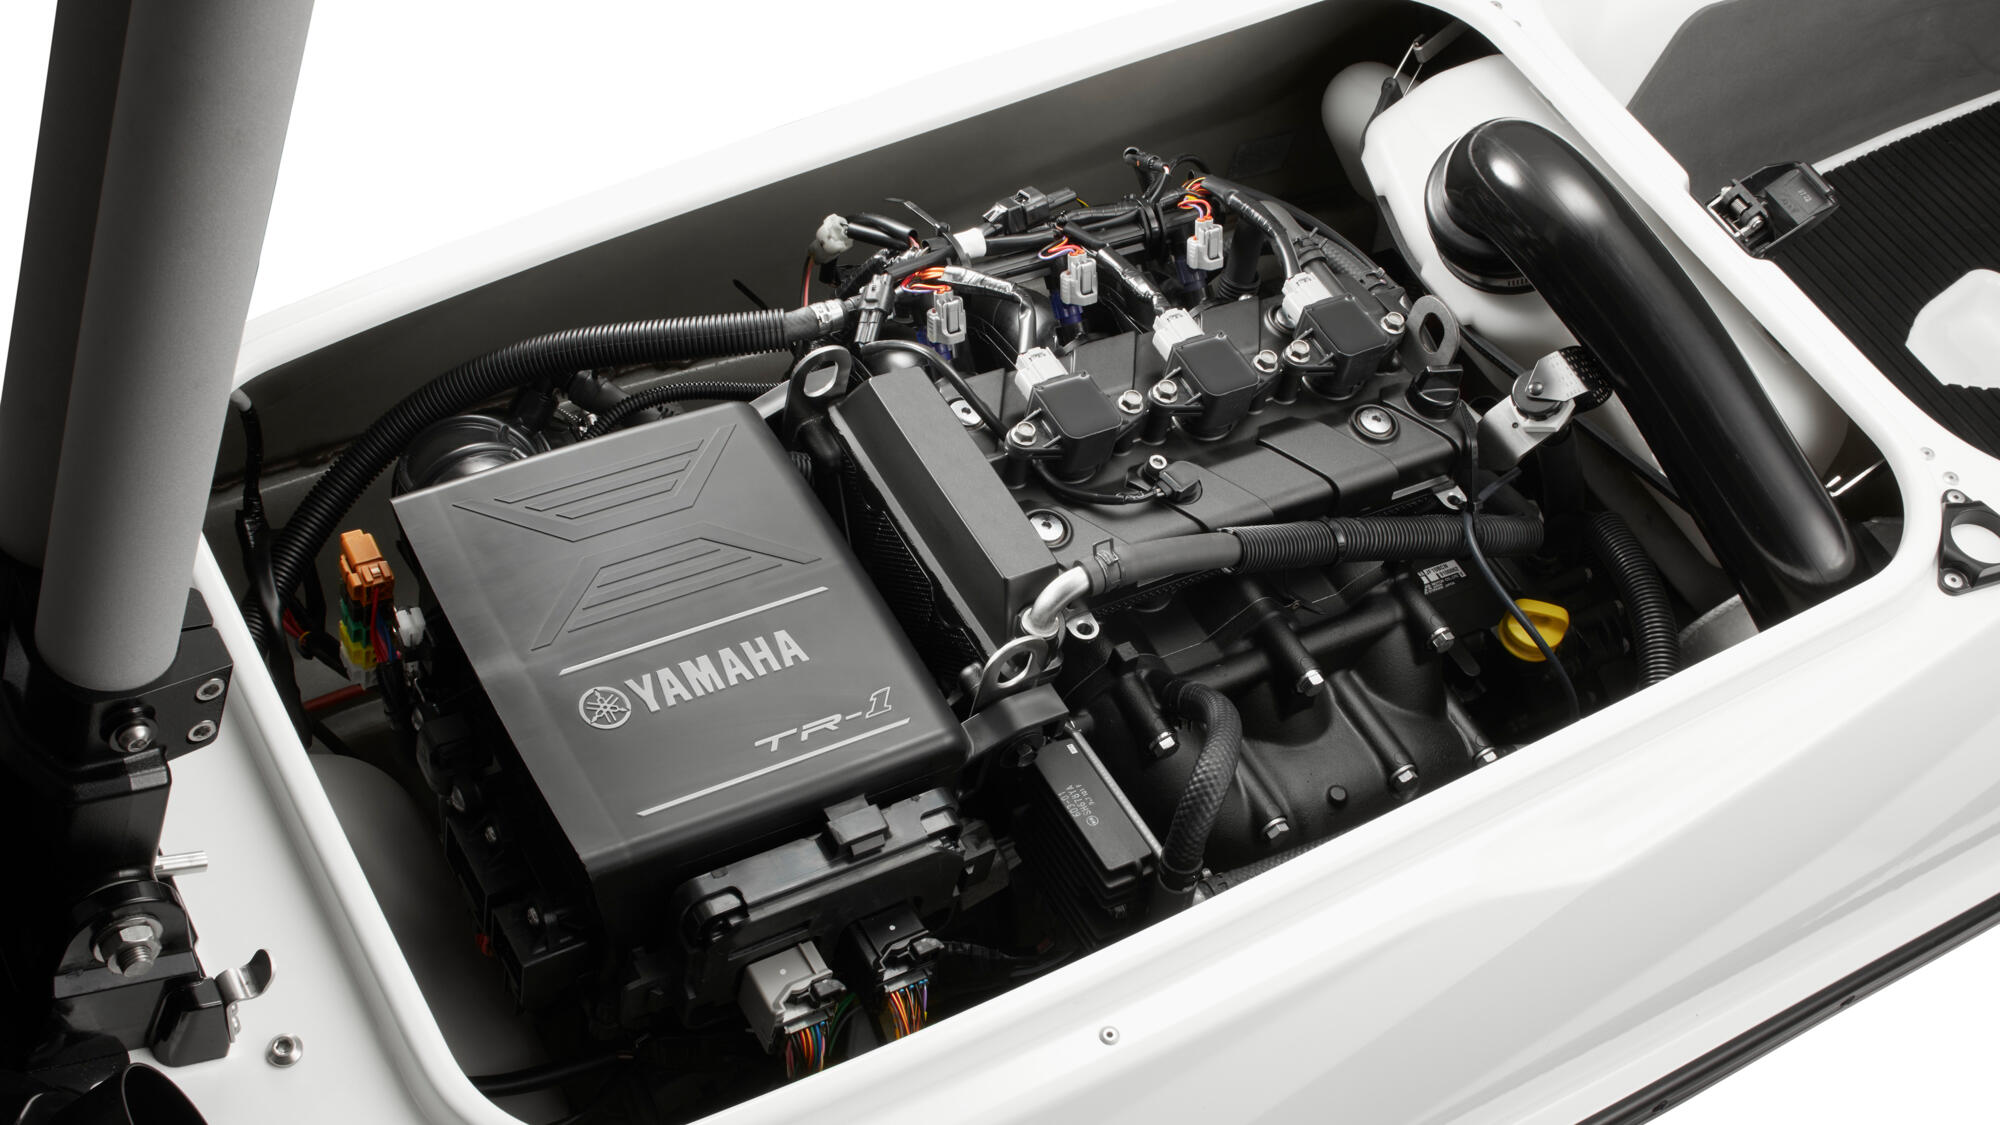 High-performance 4-stroke TR-1® engine